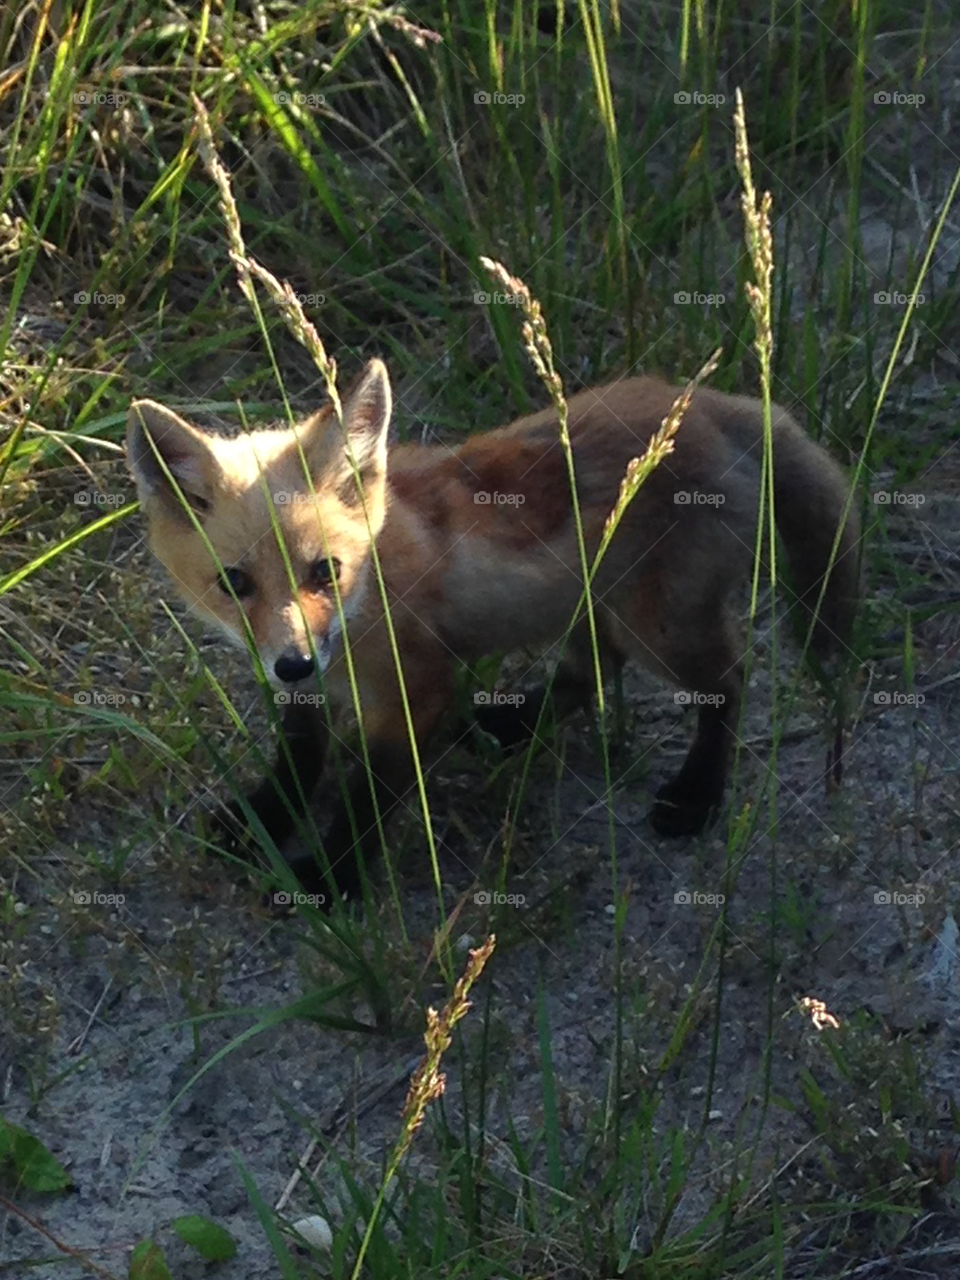 A baby fox on Fire Island.